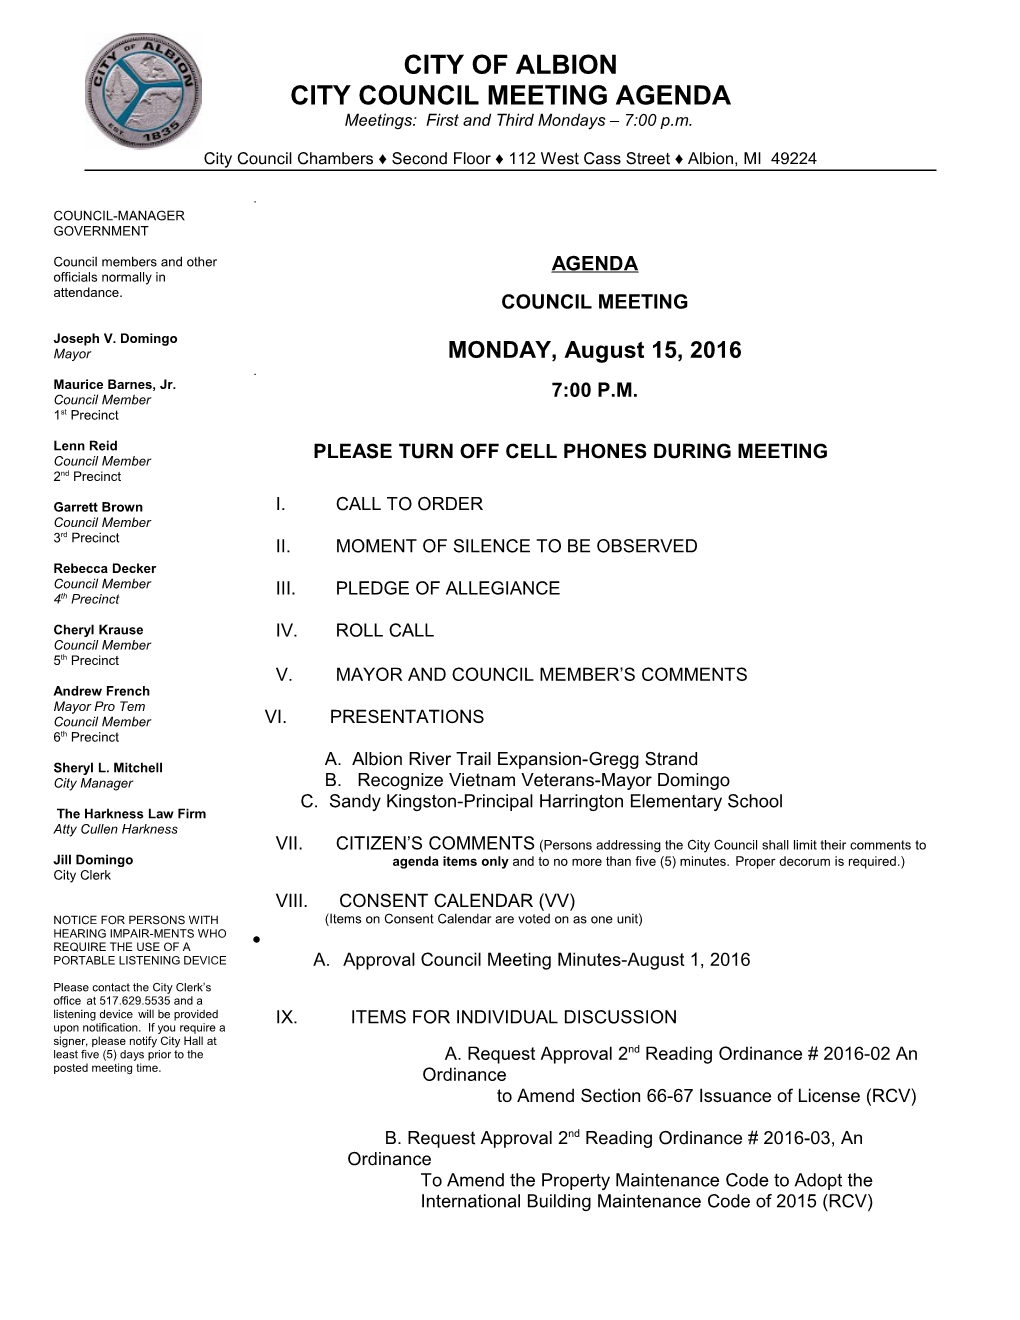 City Council Meeting Agenda s2